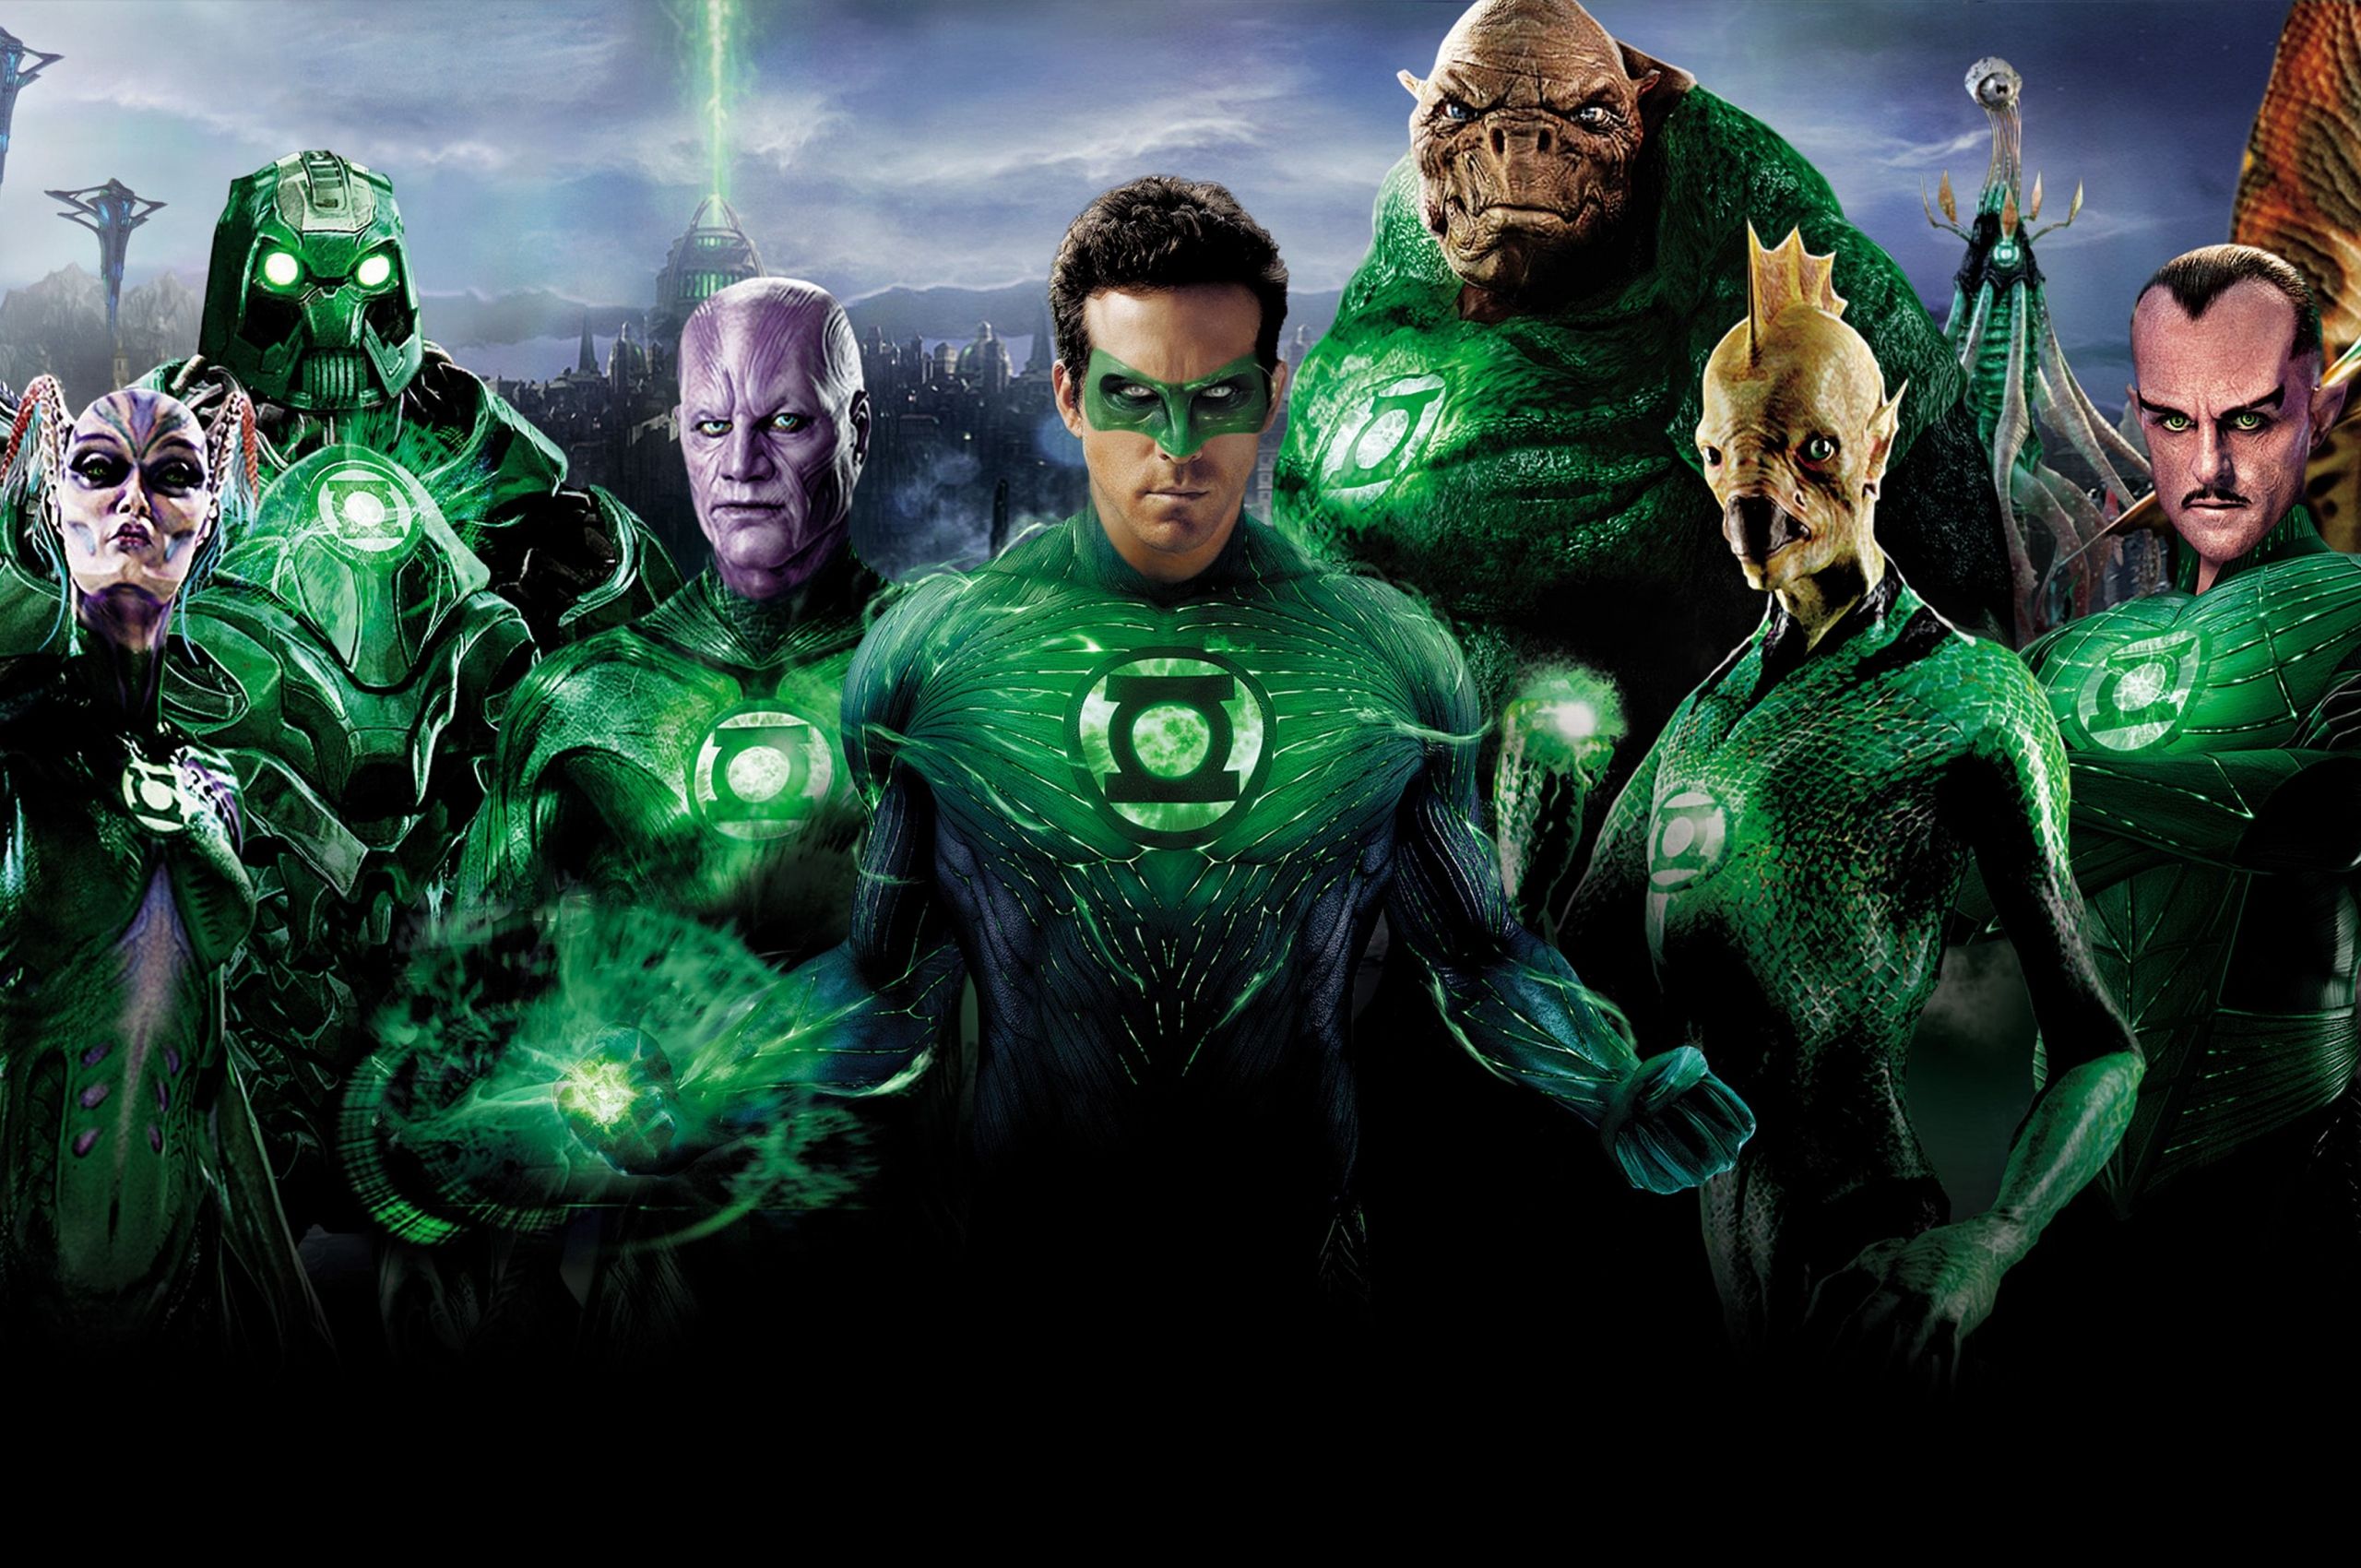 Free download Wallpaper Movies Heroes comics Green Lantern Ryan